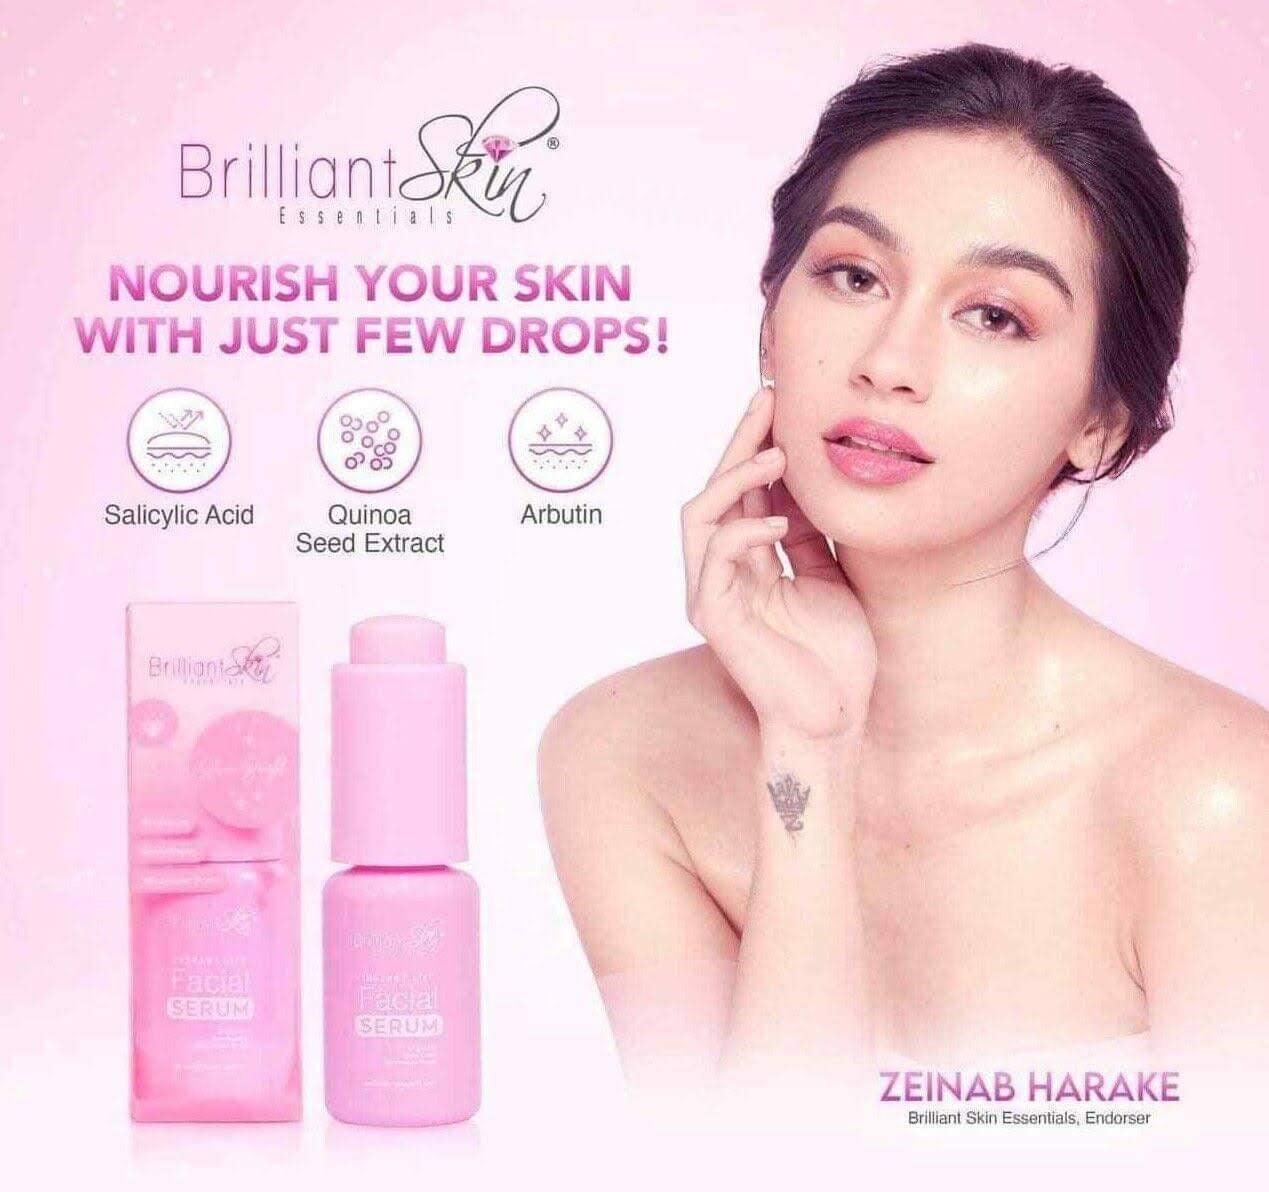 Brilliant Skin Essentials Instant Lift Facial Serum 20 ml - True Beauty Skin Essentials